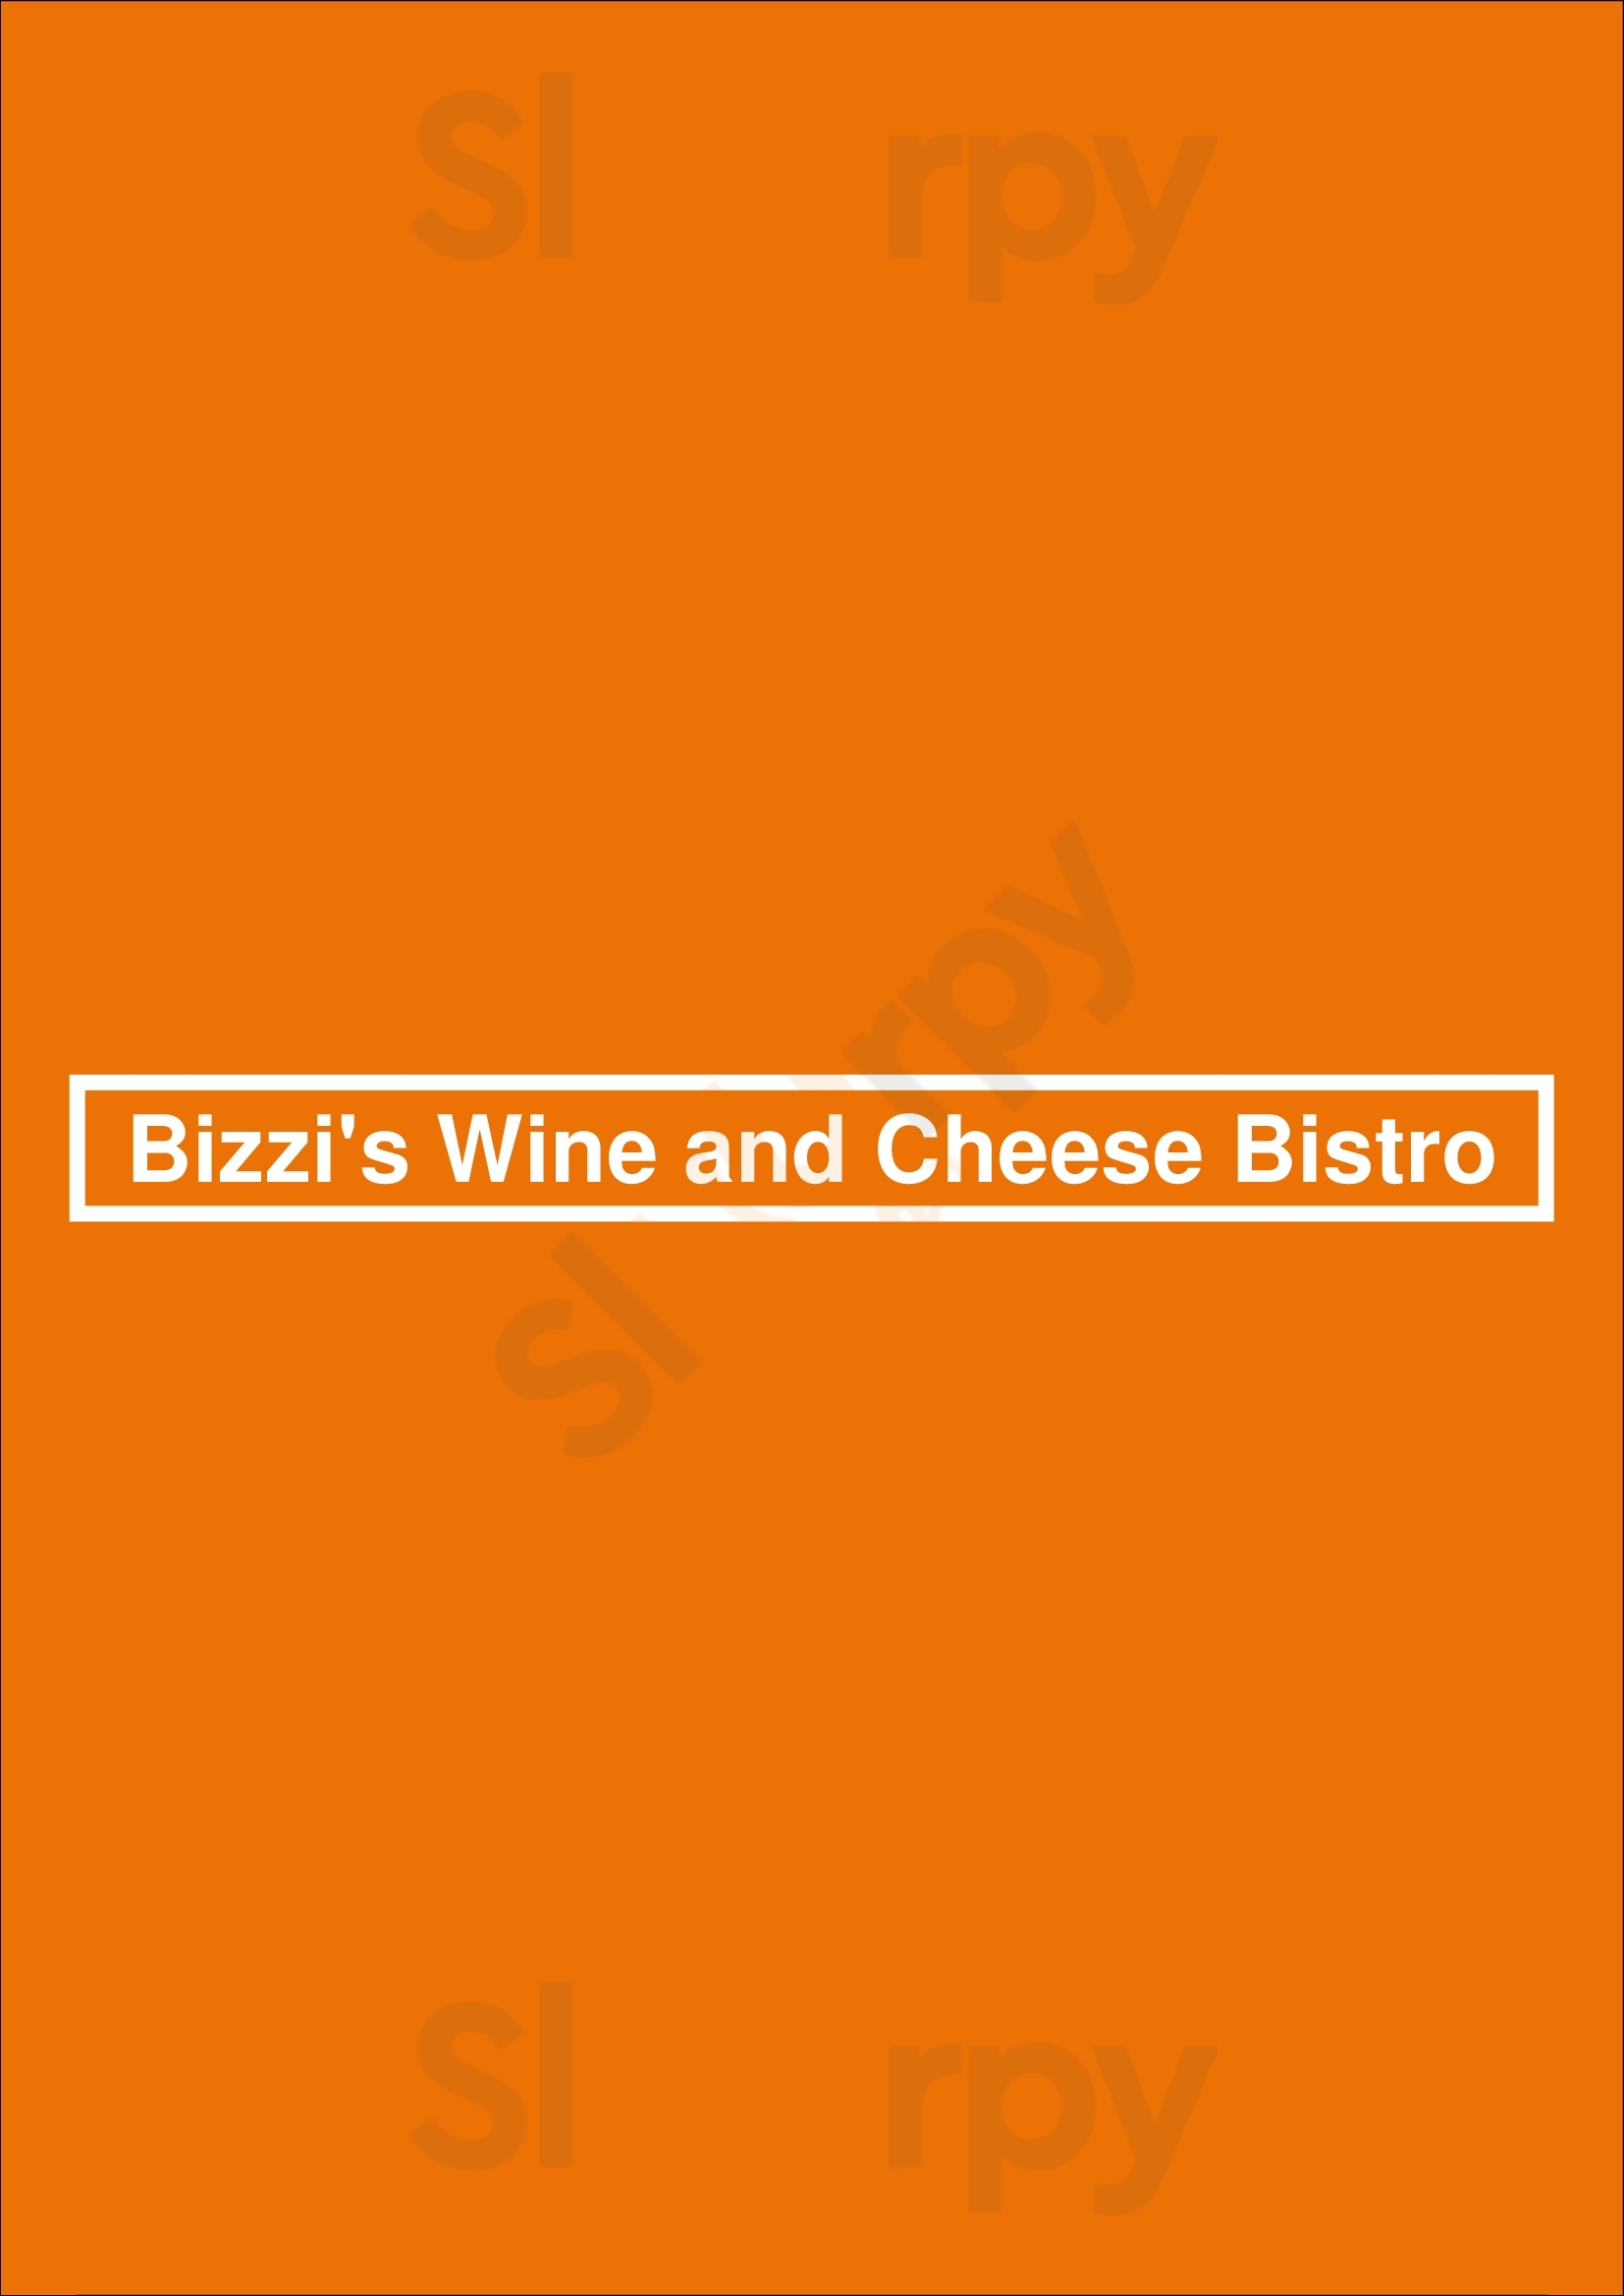 Bizzi's Wine And Cheese Bistro Bedford Menu - 1